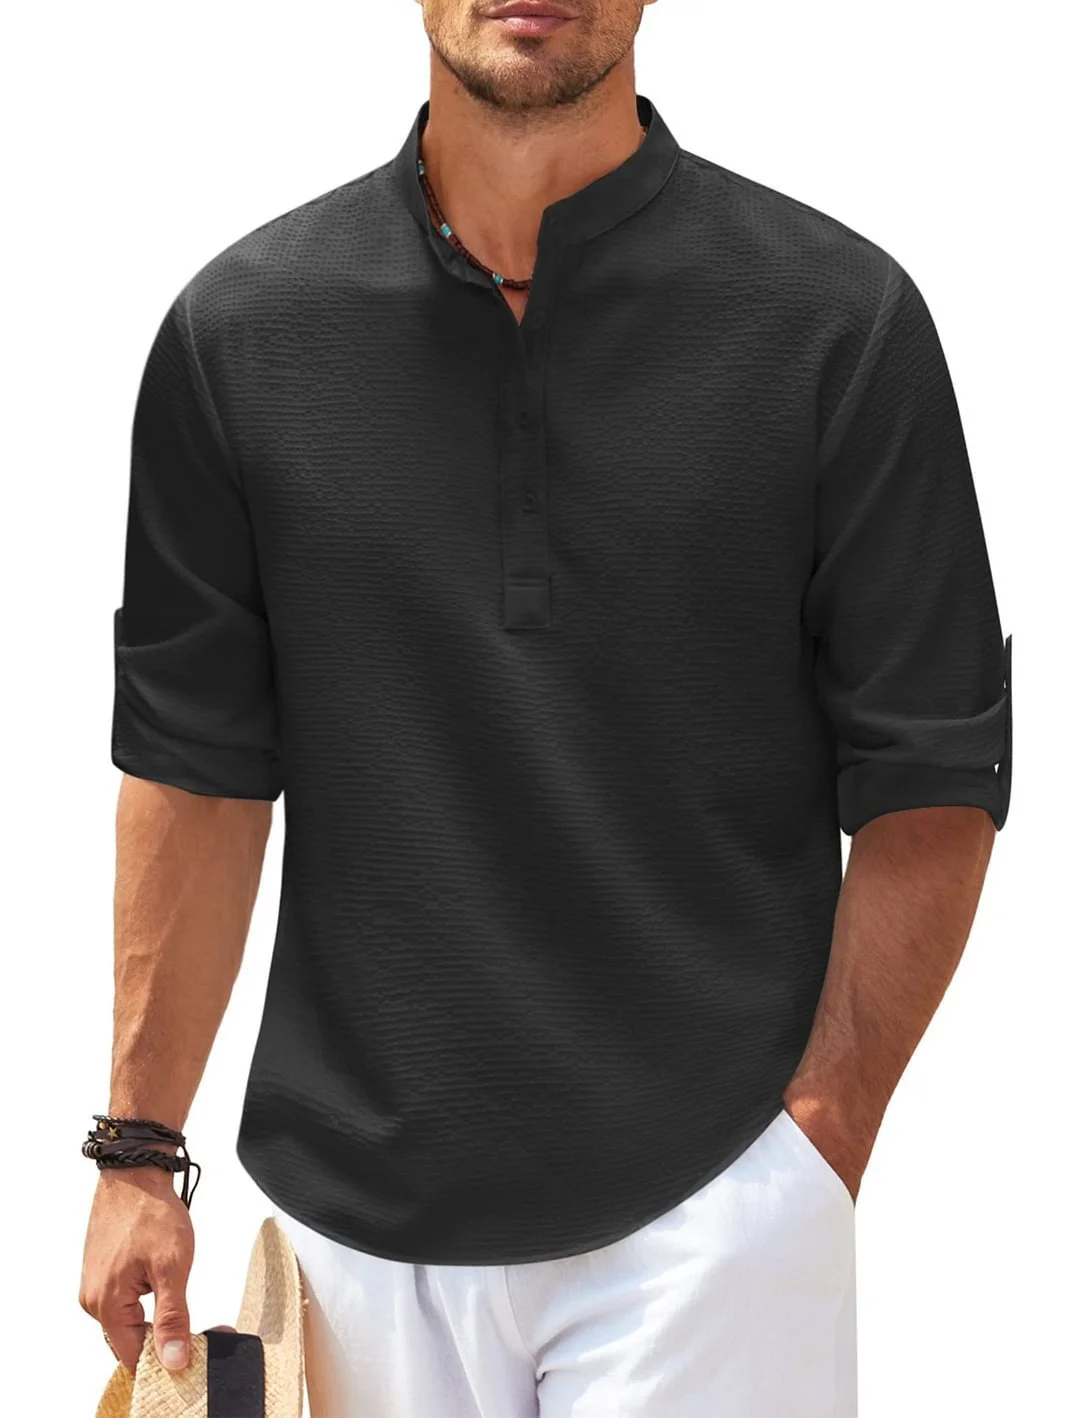 Men's Casual Collar Fashion Striped Shirts (Buy 2 Free Shipping)